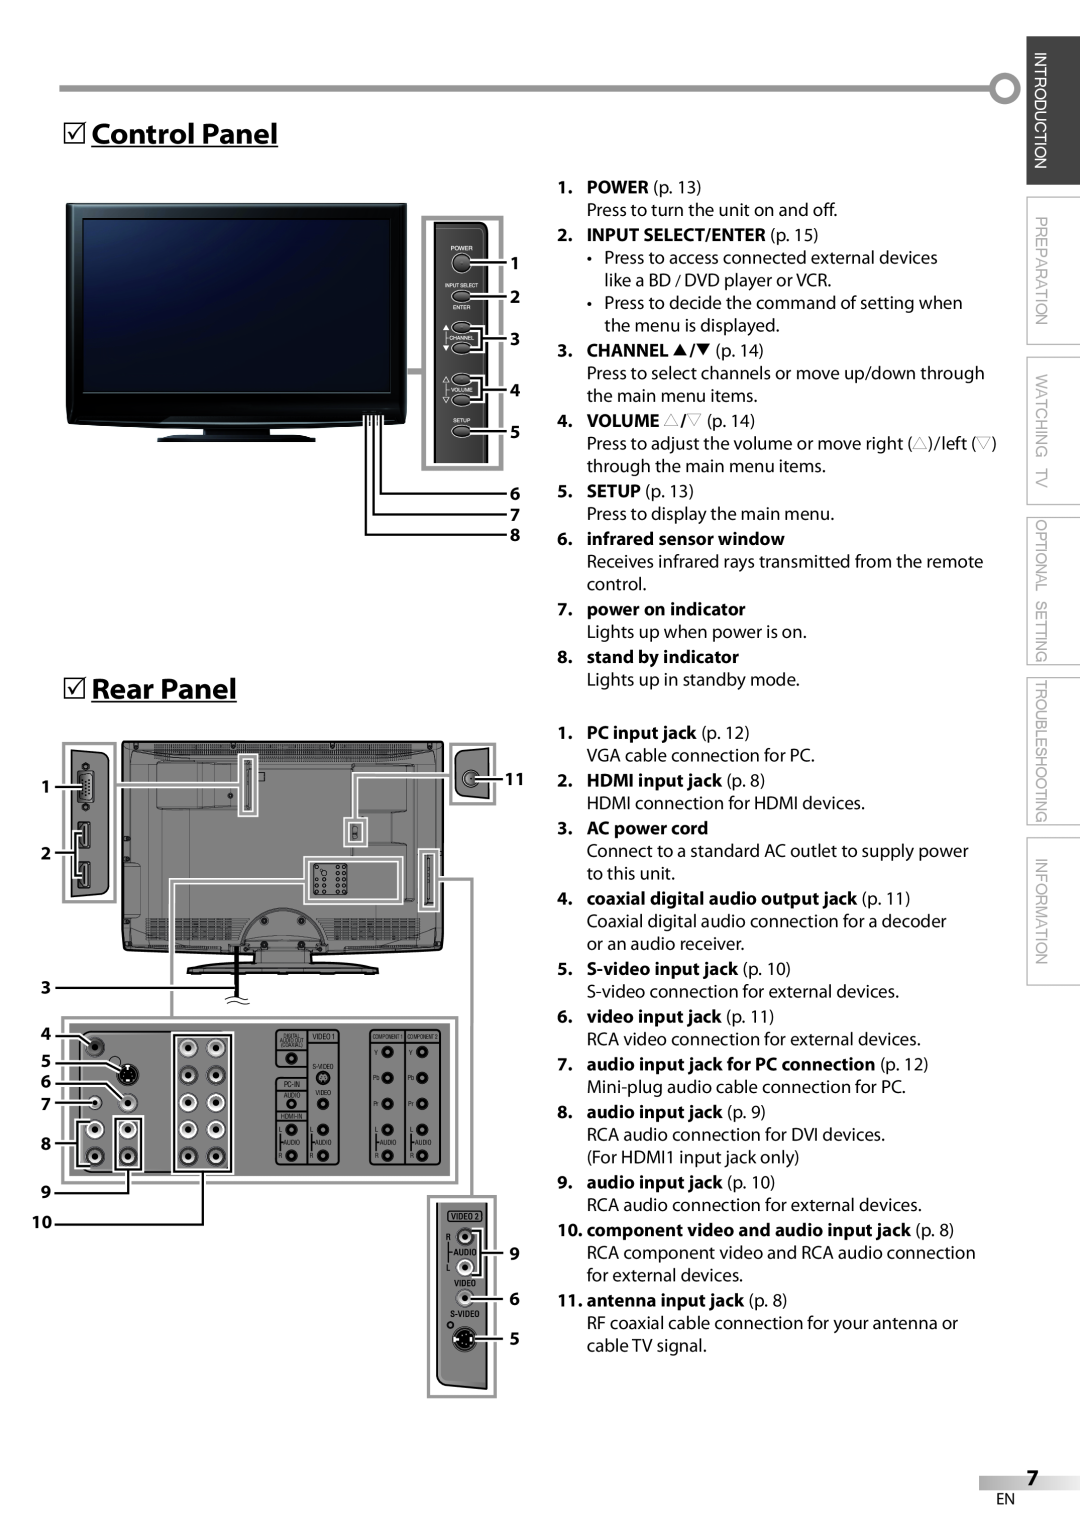 Sylvania LC370SS9 5Control Panel, 5Rear Panel, Troubleshooting Information, INPUT SELECT/ENTER p, infrared sensor window 